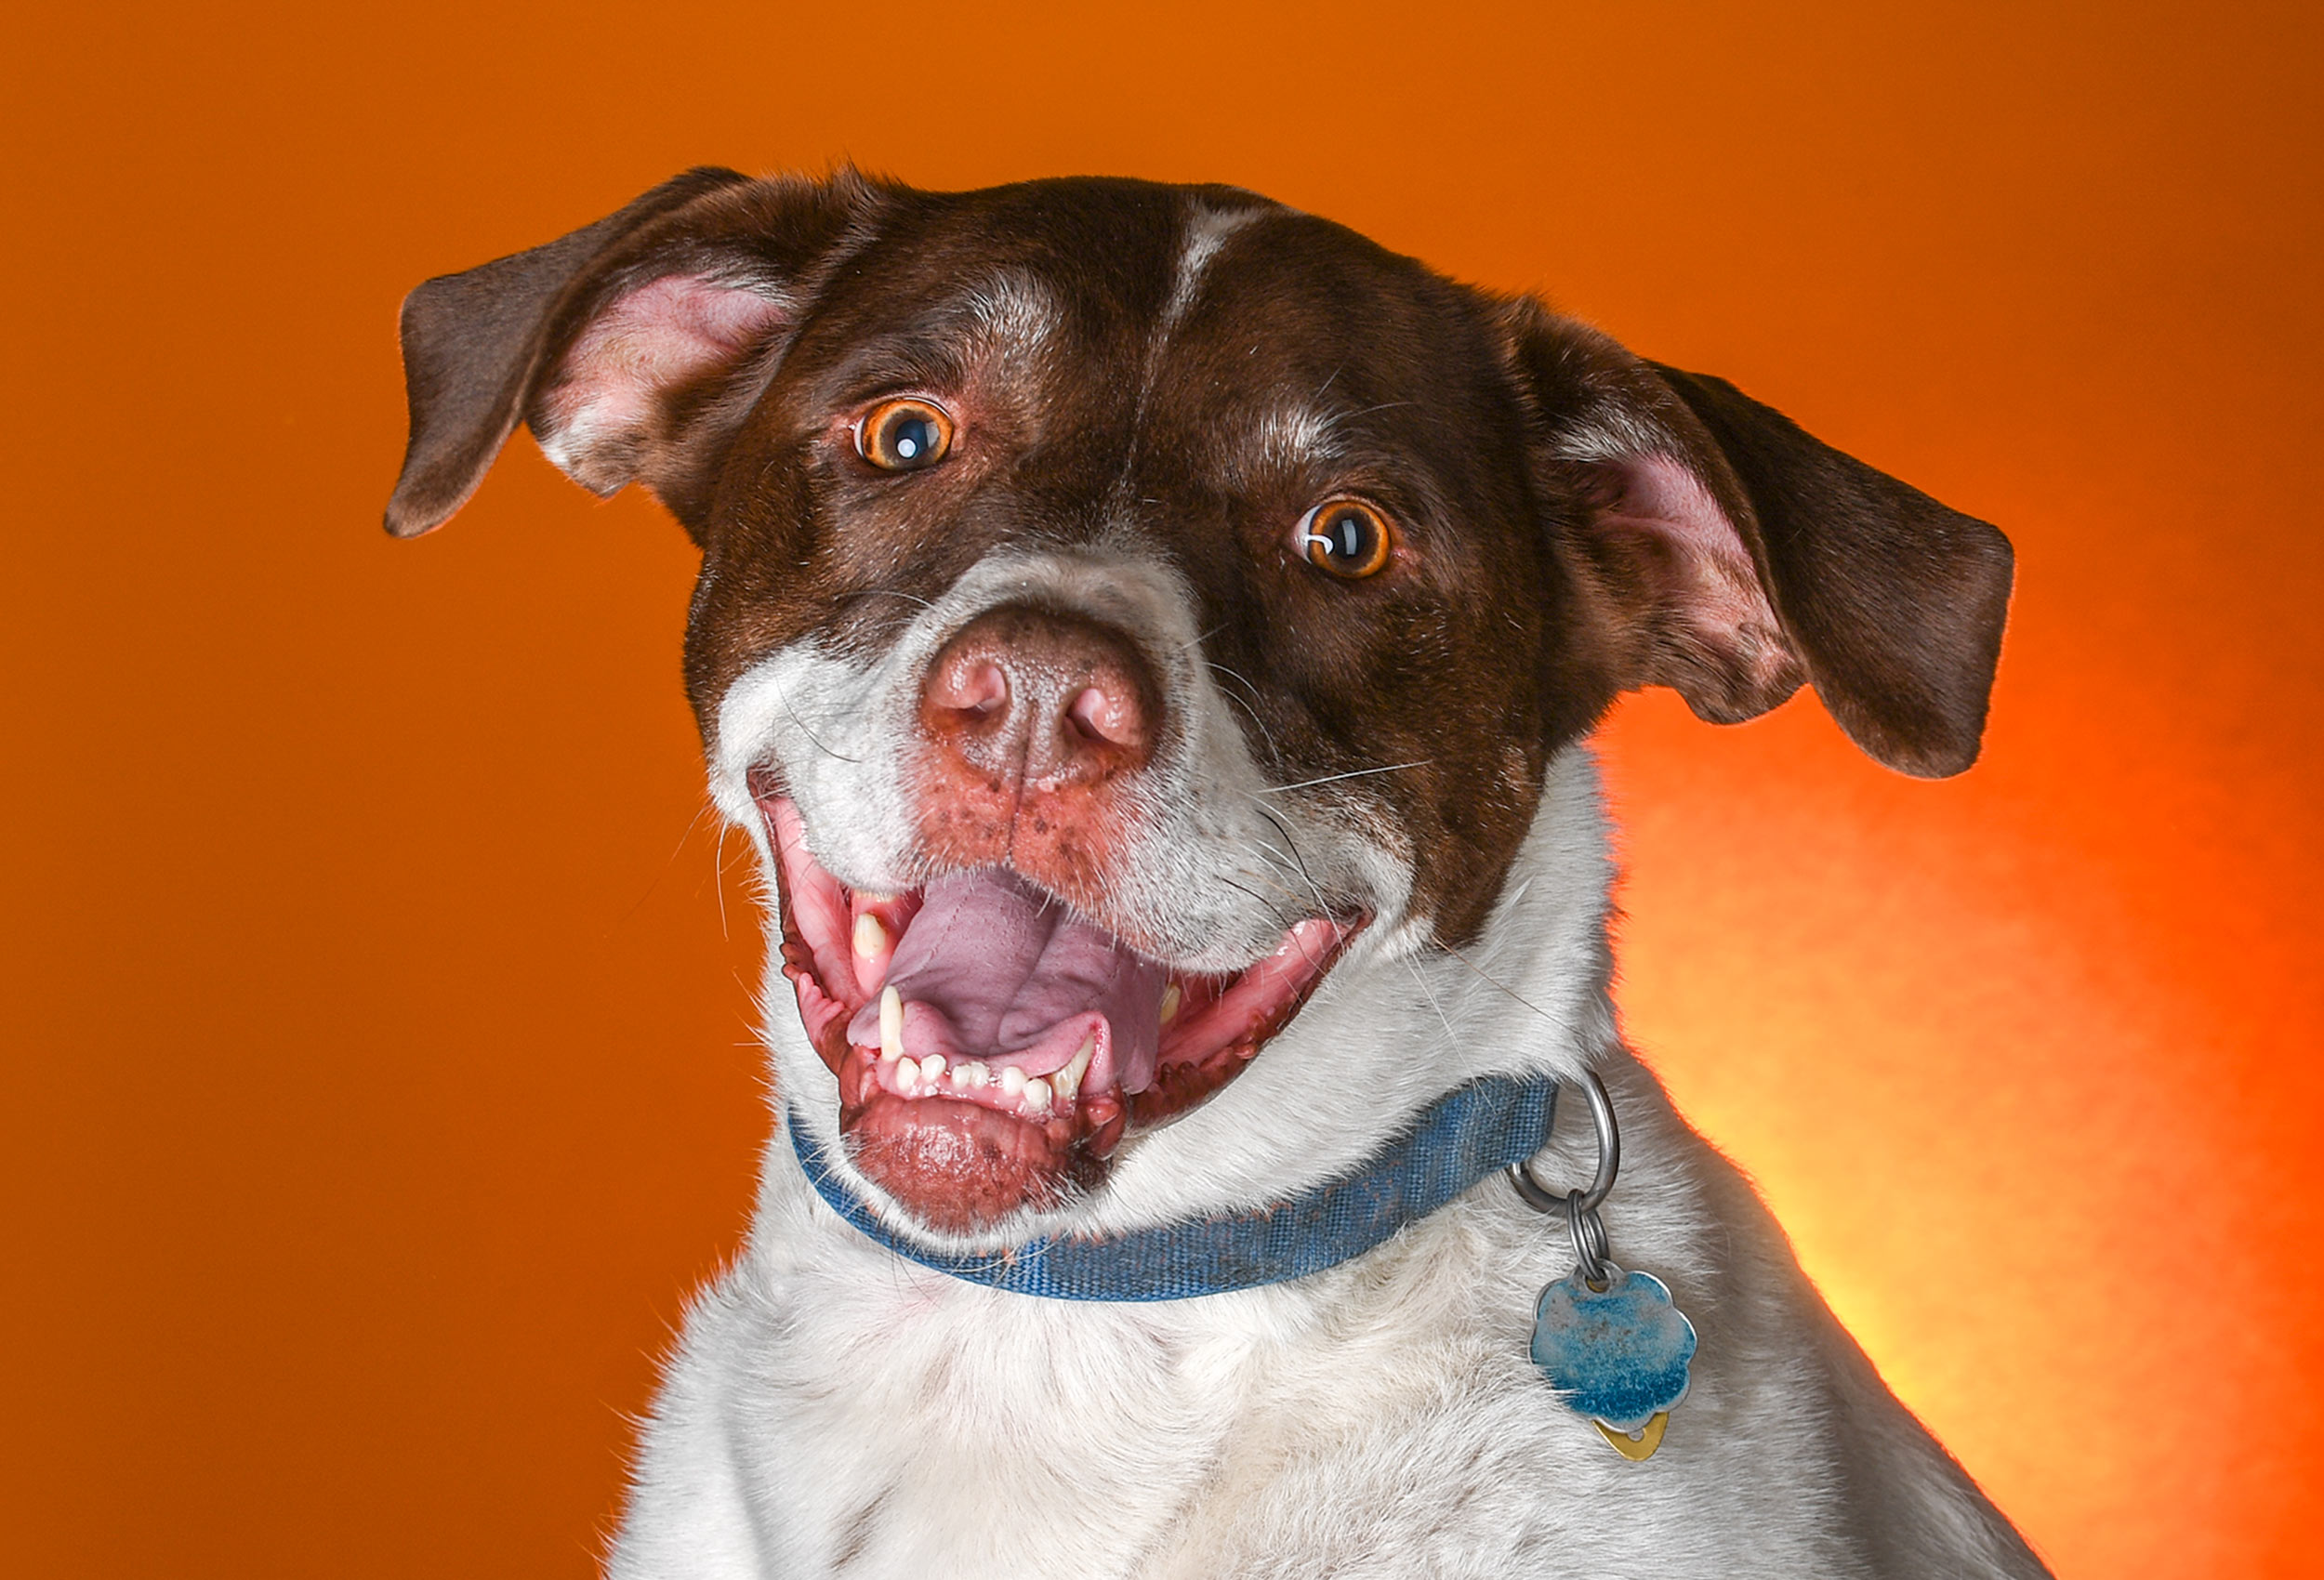 Dog studio photography with orange seamless paper background